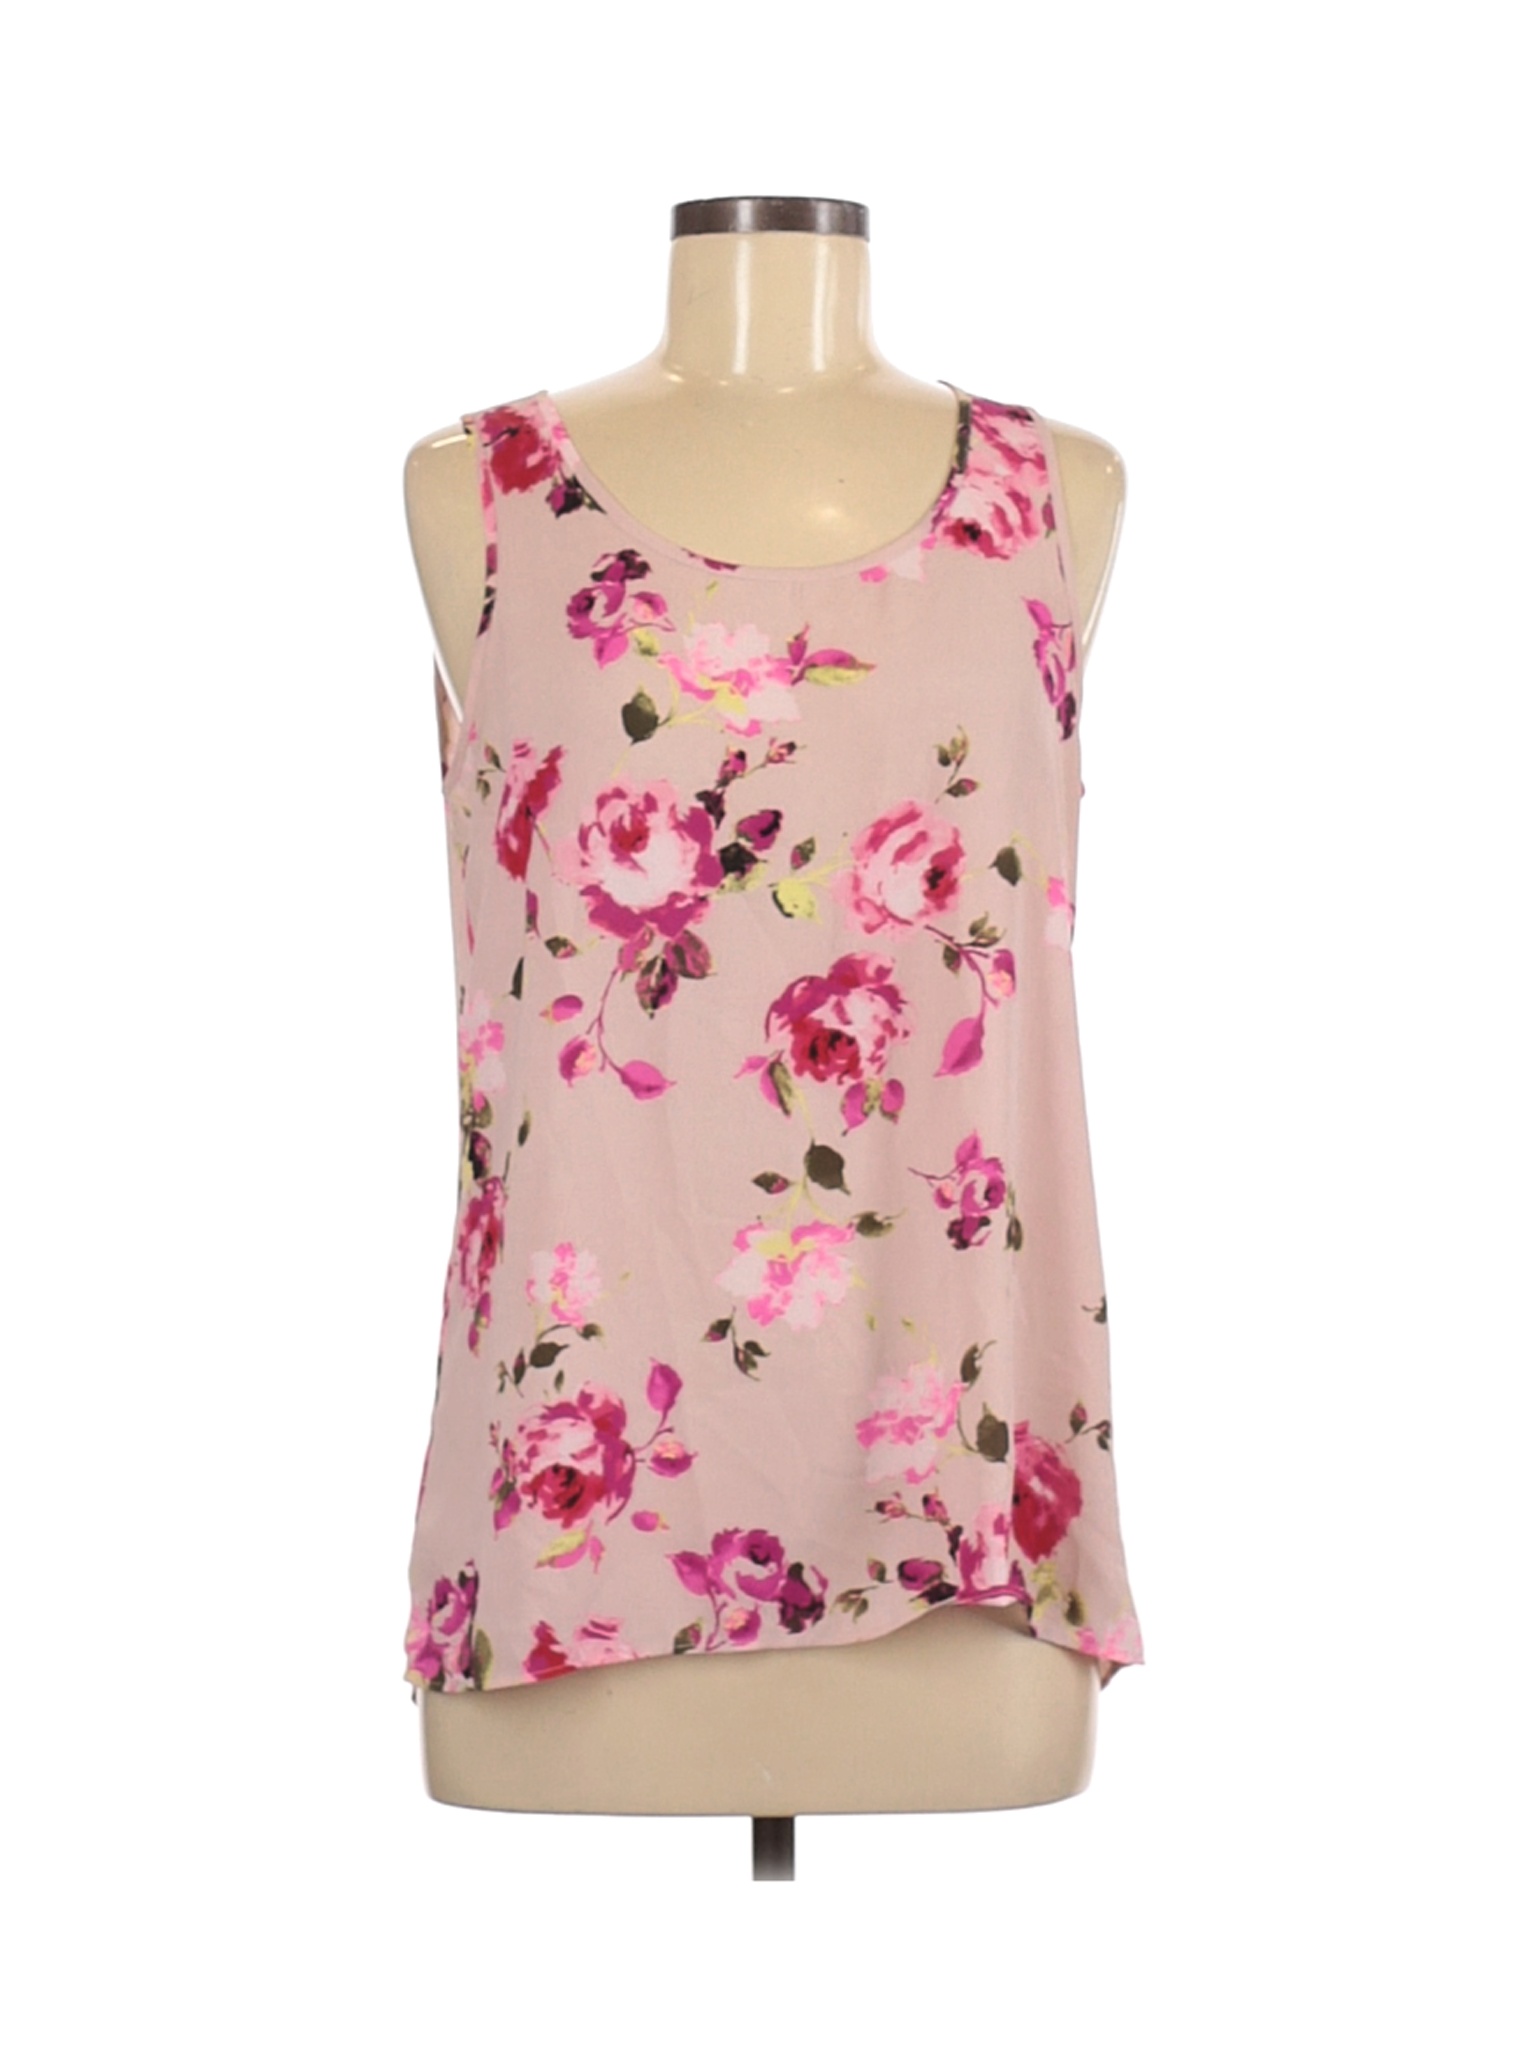 Express Women Pink Sleeveless Blouse M | eBay